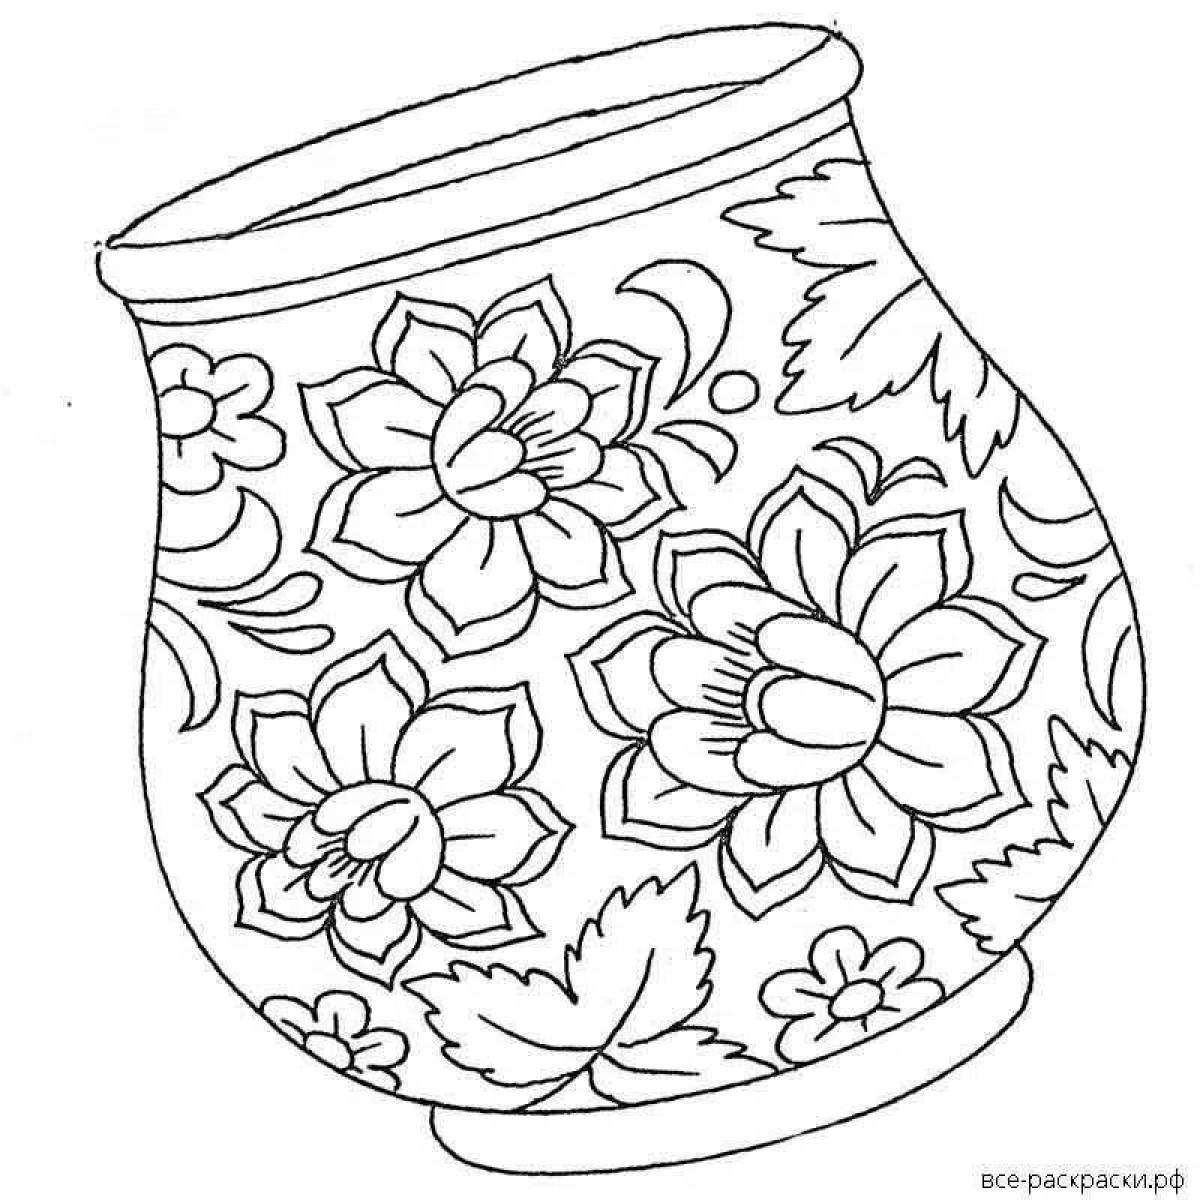 Charming jug gzhel coloring